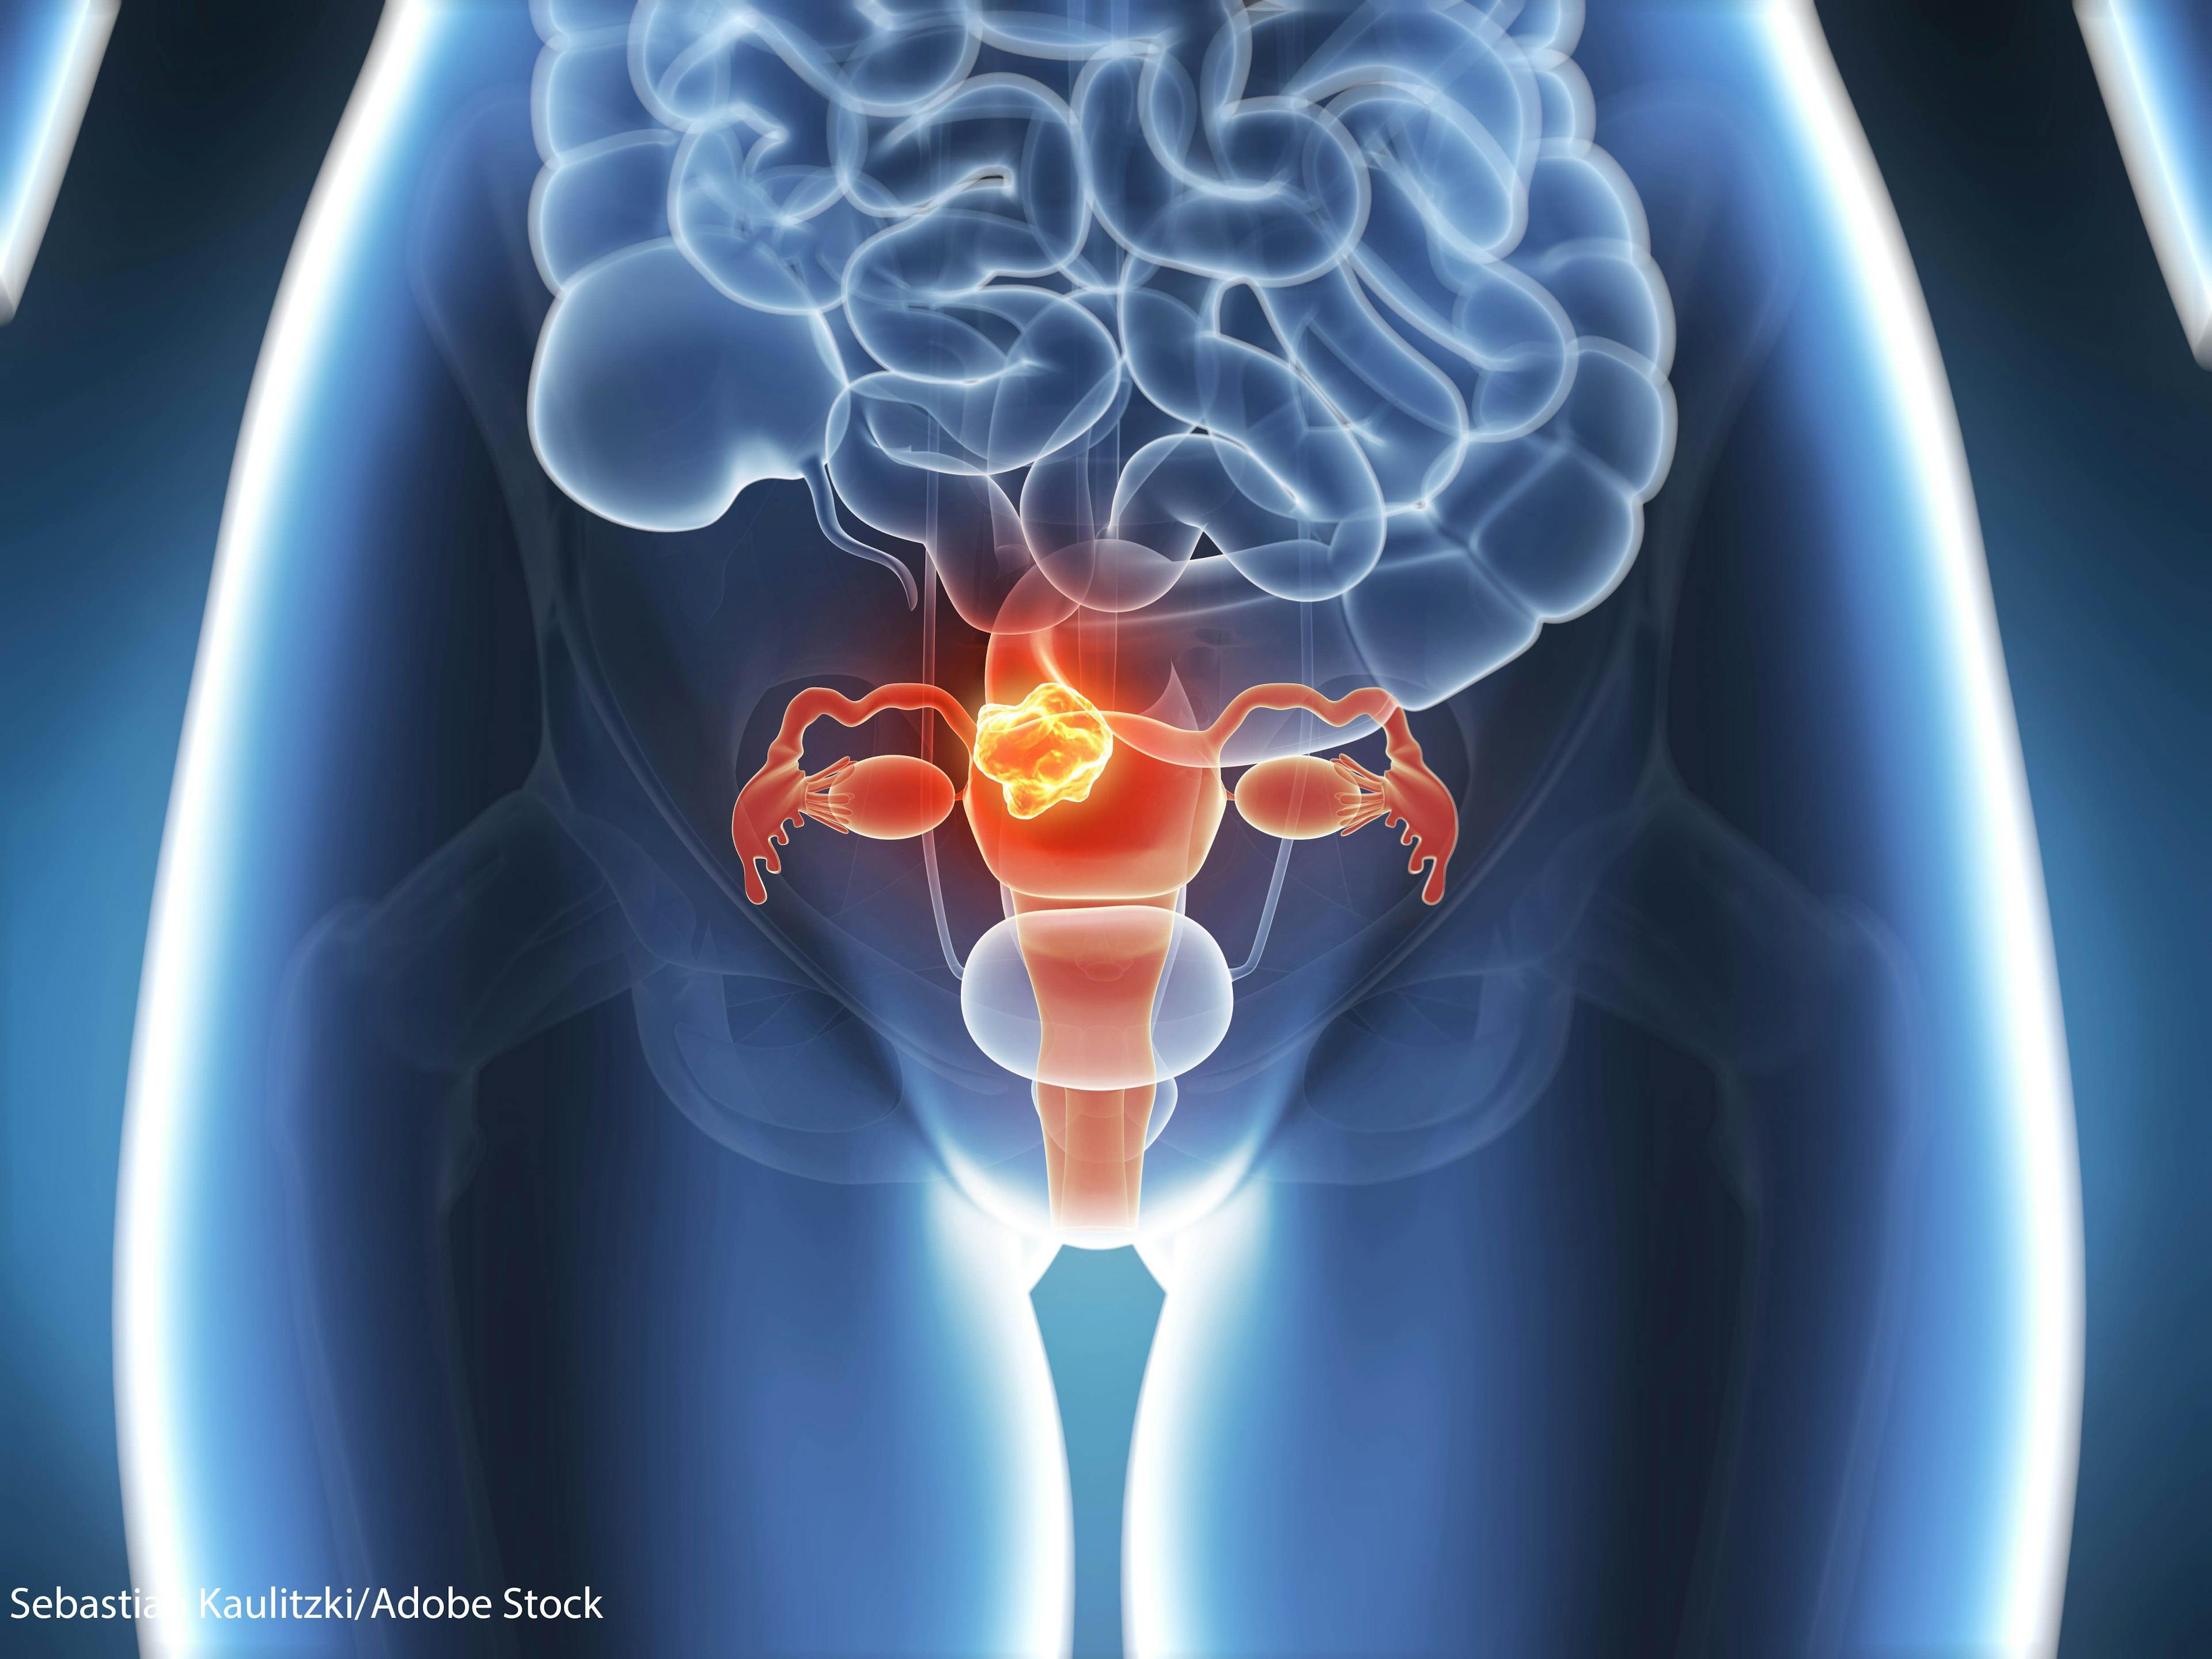 Adavosertib Induces Tumor Shrinkage in 30% of Patients with Uterine Serous Carcinoma